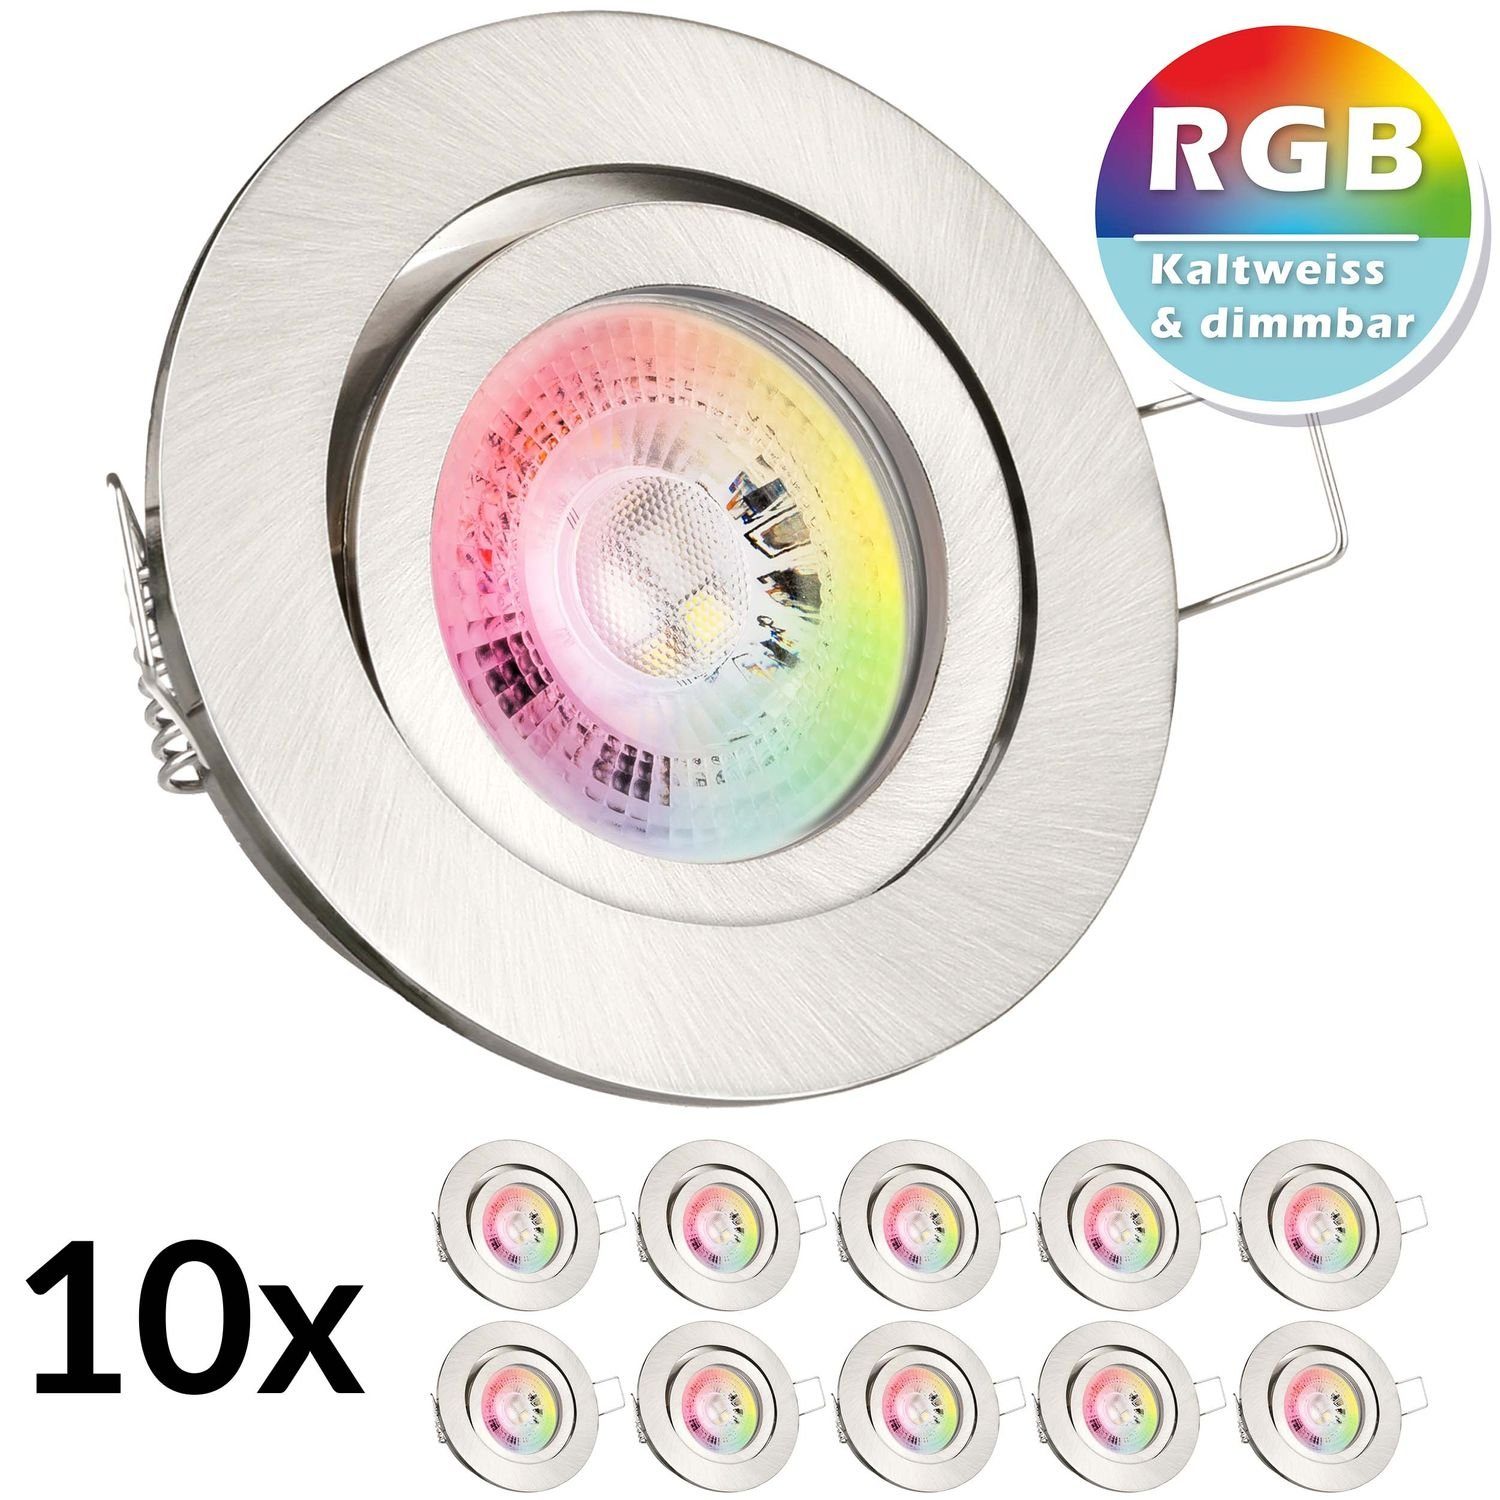 Wir haben eine große Auswahl an LEDANDO LED Einbaustrahler 10er RGB in GU10 Einbaustrahler Set m gebürstet LED edelstahl / silber